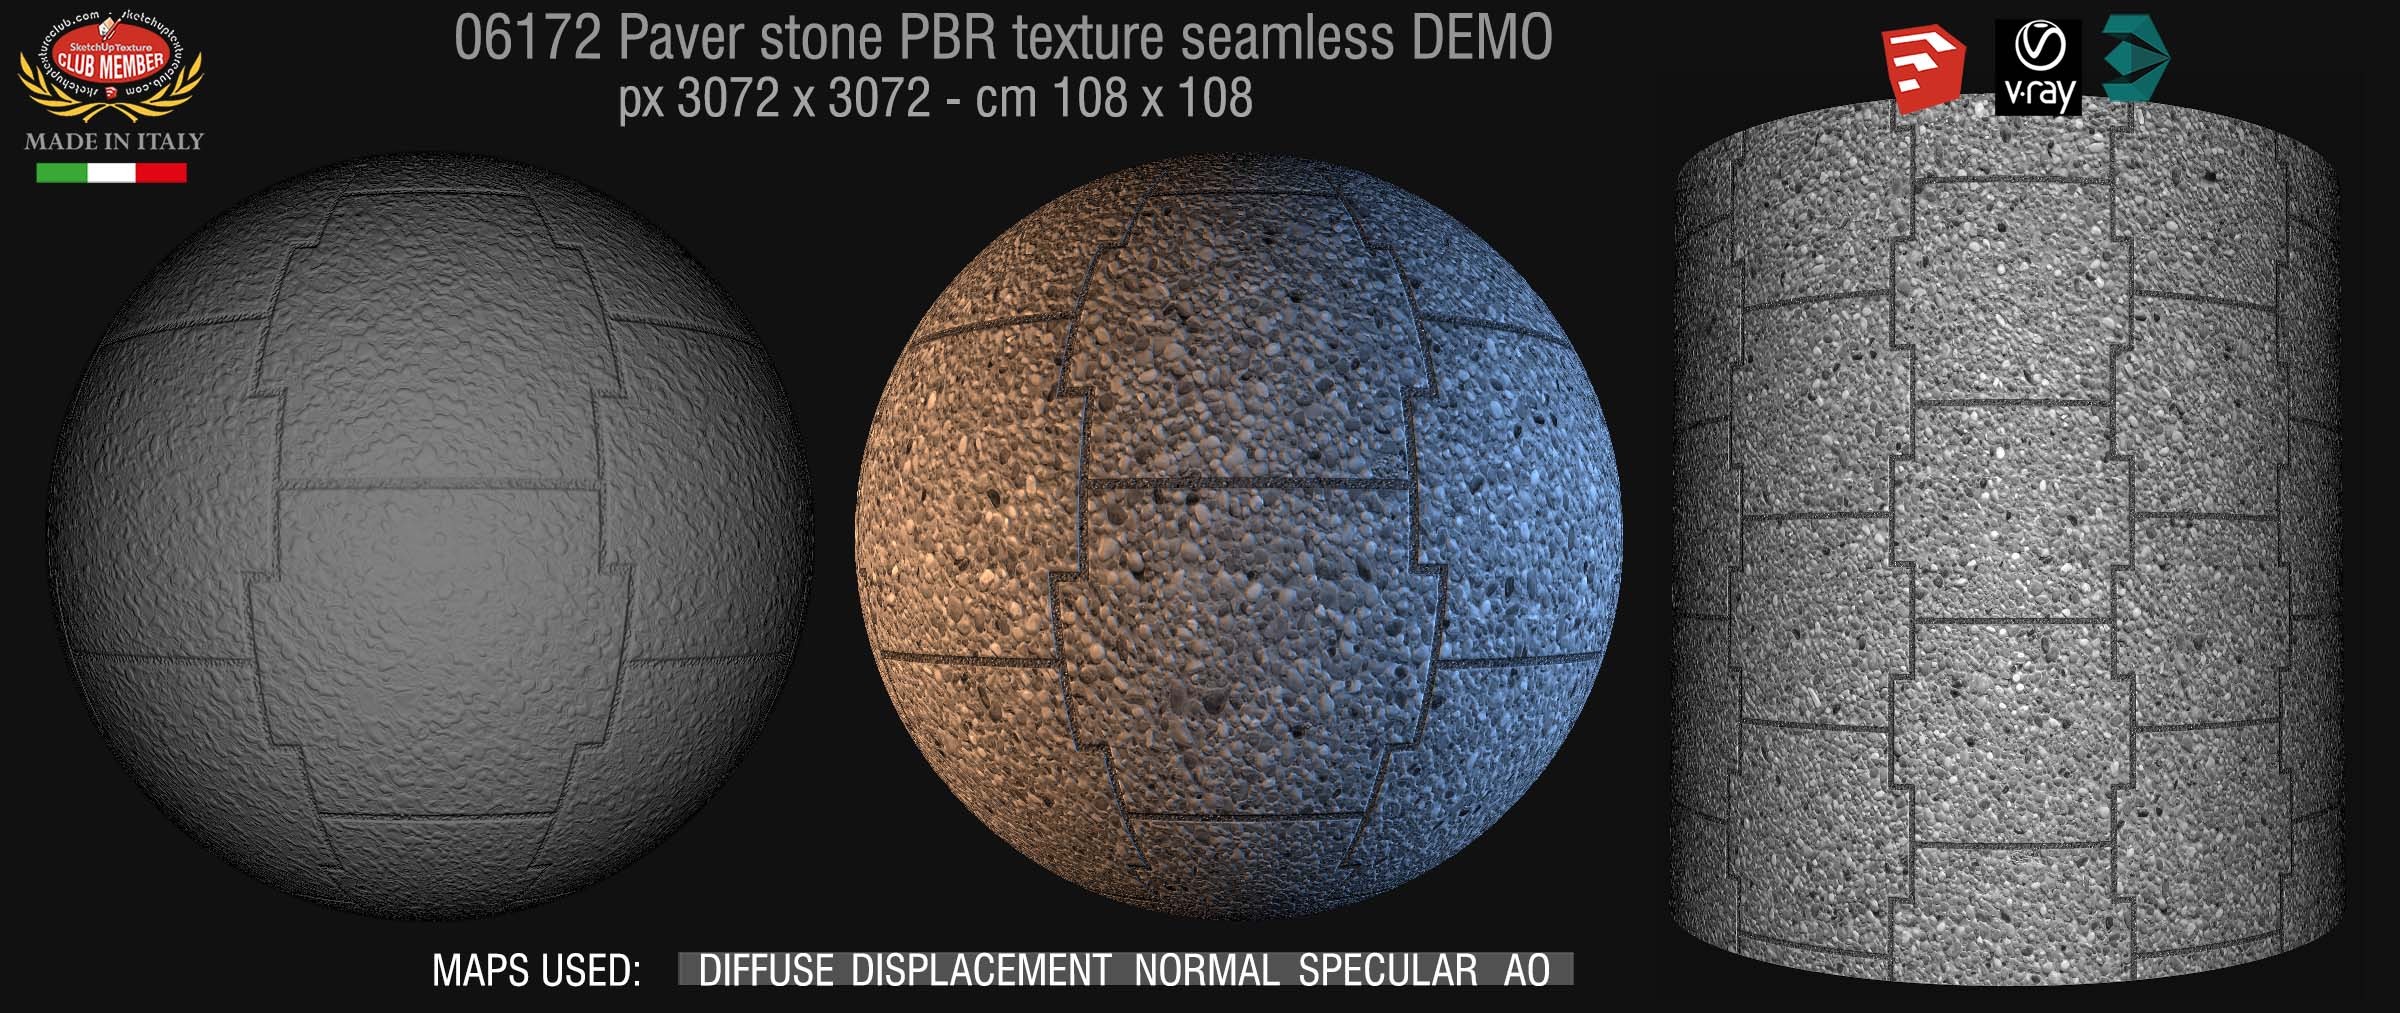 06172 paver stone PBR texture seamless DEMO